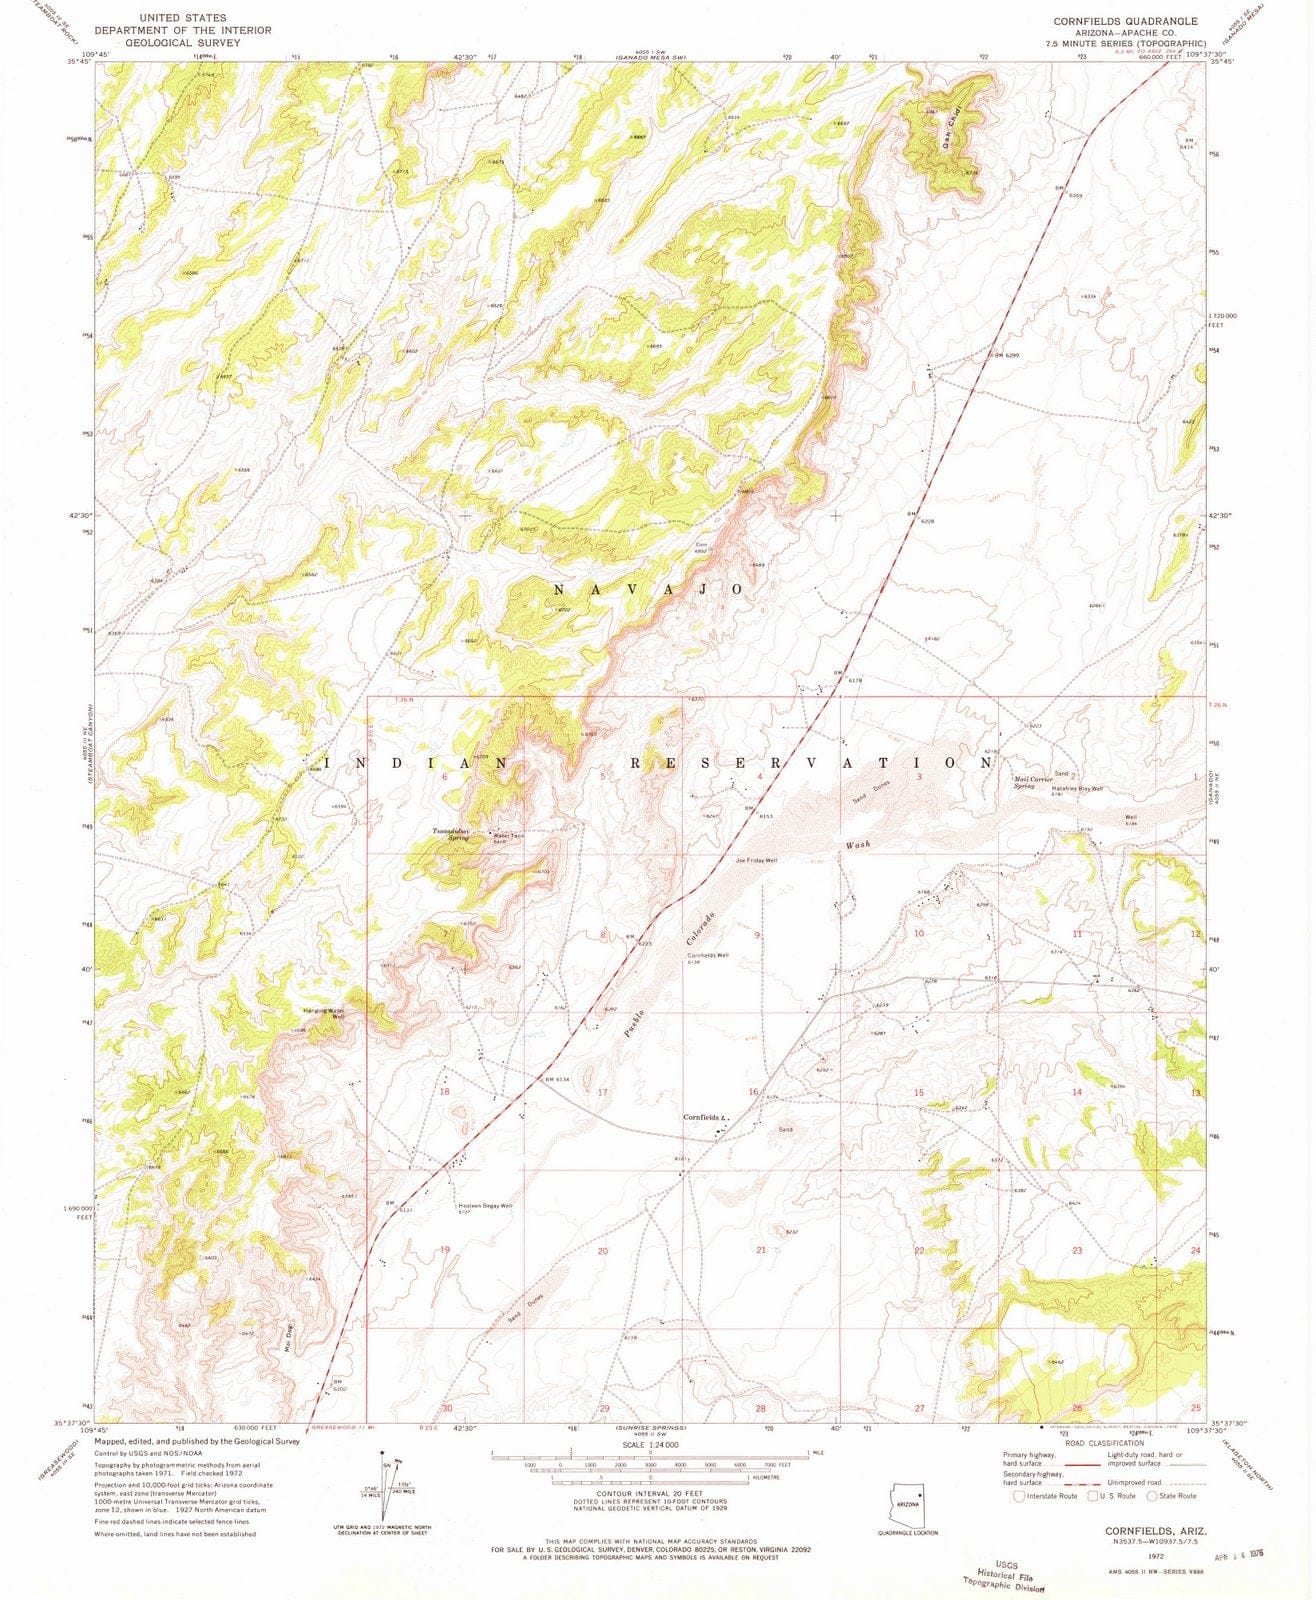 1972 Cornfields, AZ - Arizona - USGS Topographic Map